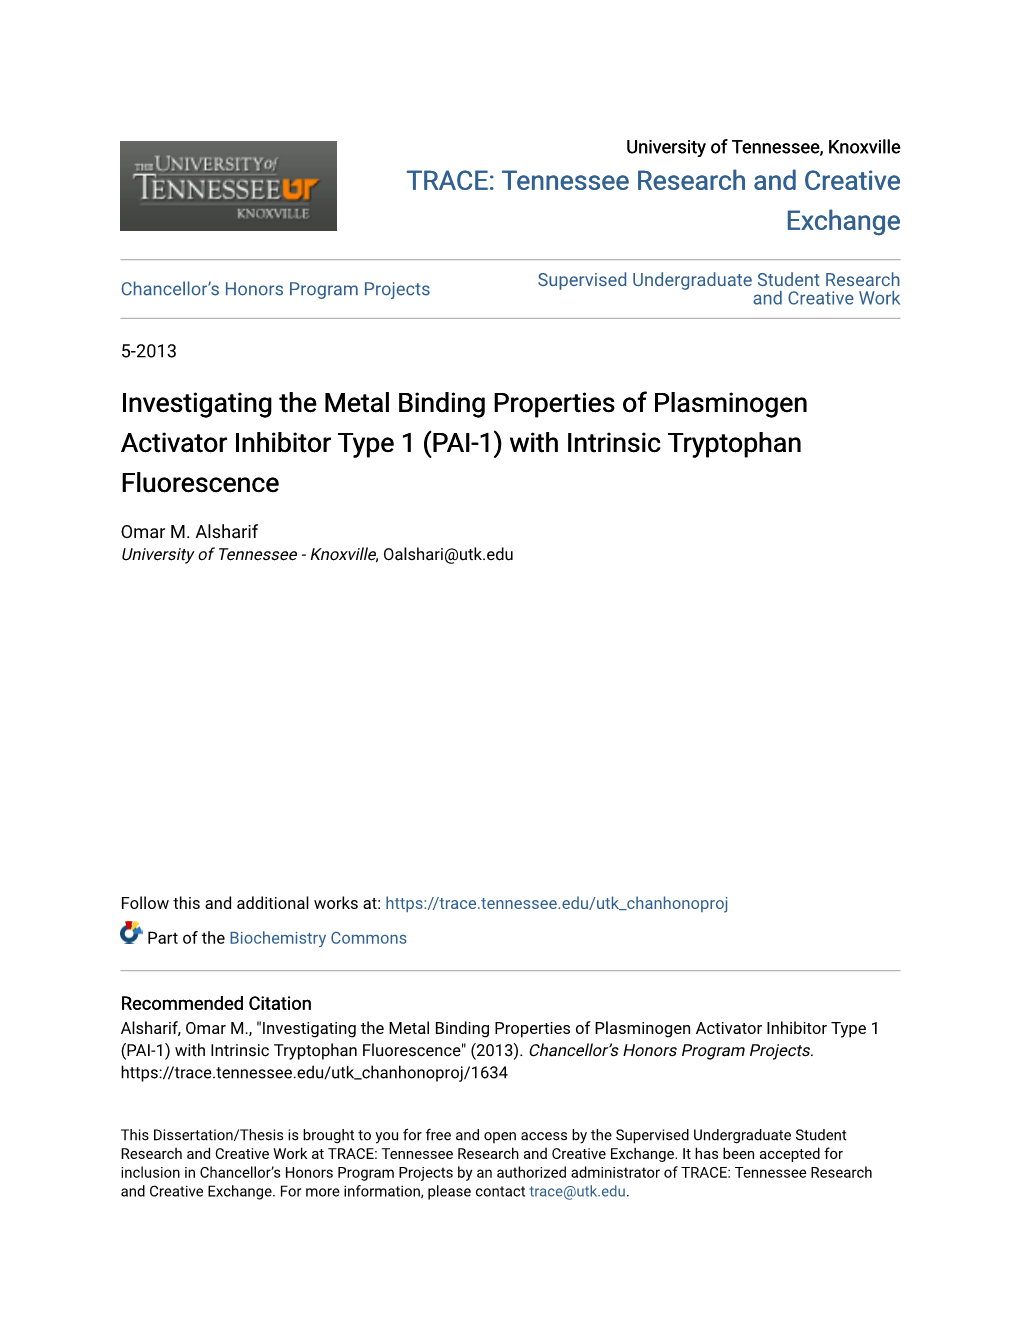 Investigating the Metal Binding Properties of Plasminogen Activator Inhibitor Type 1 (PAI-1) with Intrinsic Tryptophan Fluorescence